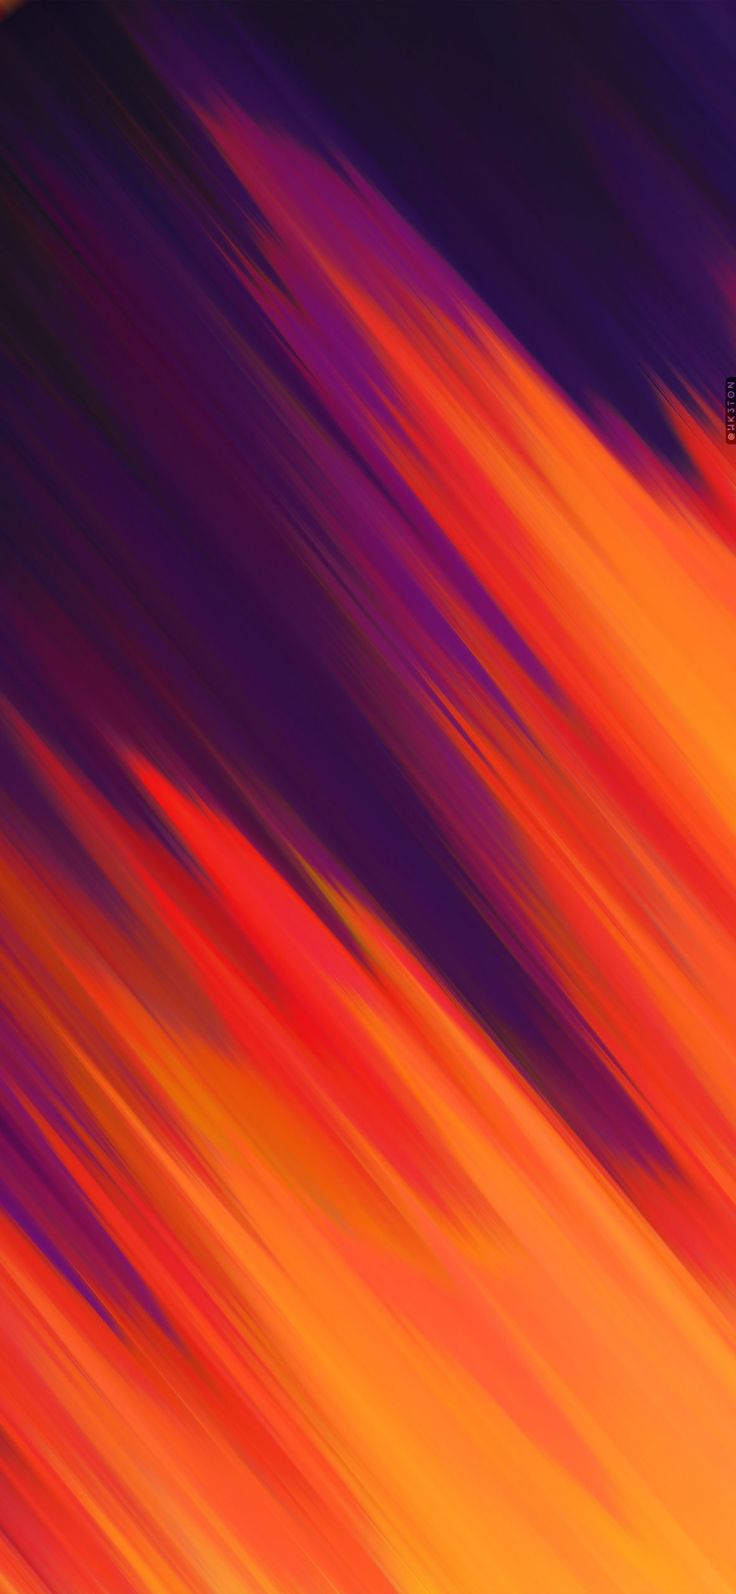 Deep fall colors by Hk3ToN. iPhone wallpaper image, Galaxy phone wallpaper, Pink wallpaper background